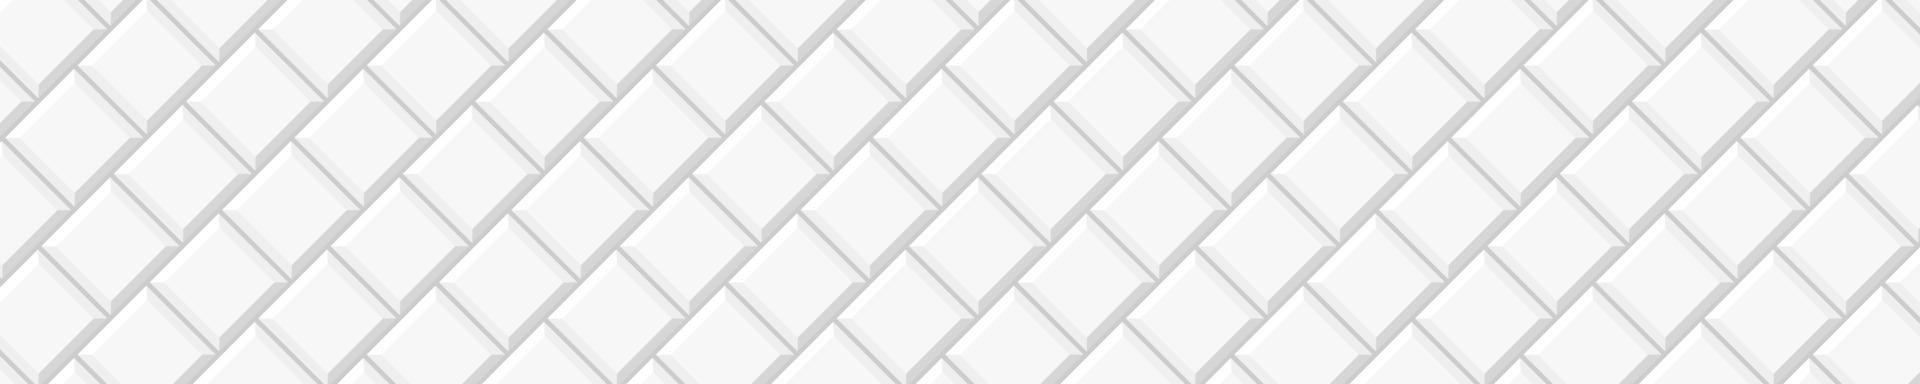 White square tile in diagonal arrangement. Bathroom or toilet ceramic wall texture. Kitchen backsplash seamless pattern. Interior or exterior horizontal mosaic surface vector